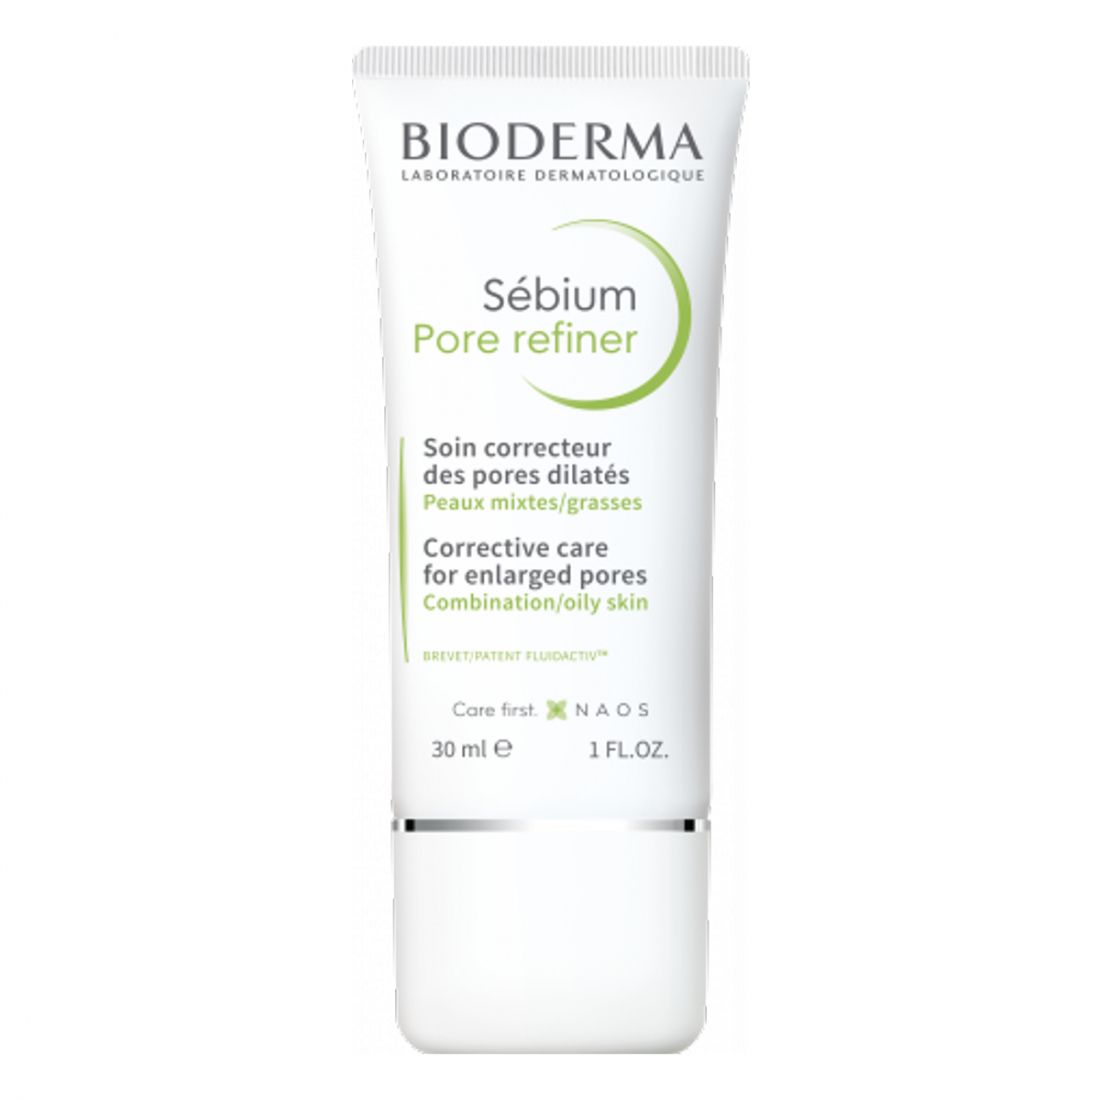 Bioderma - Soin correcteur des pores 'Sébium' - 30 ml